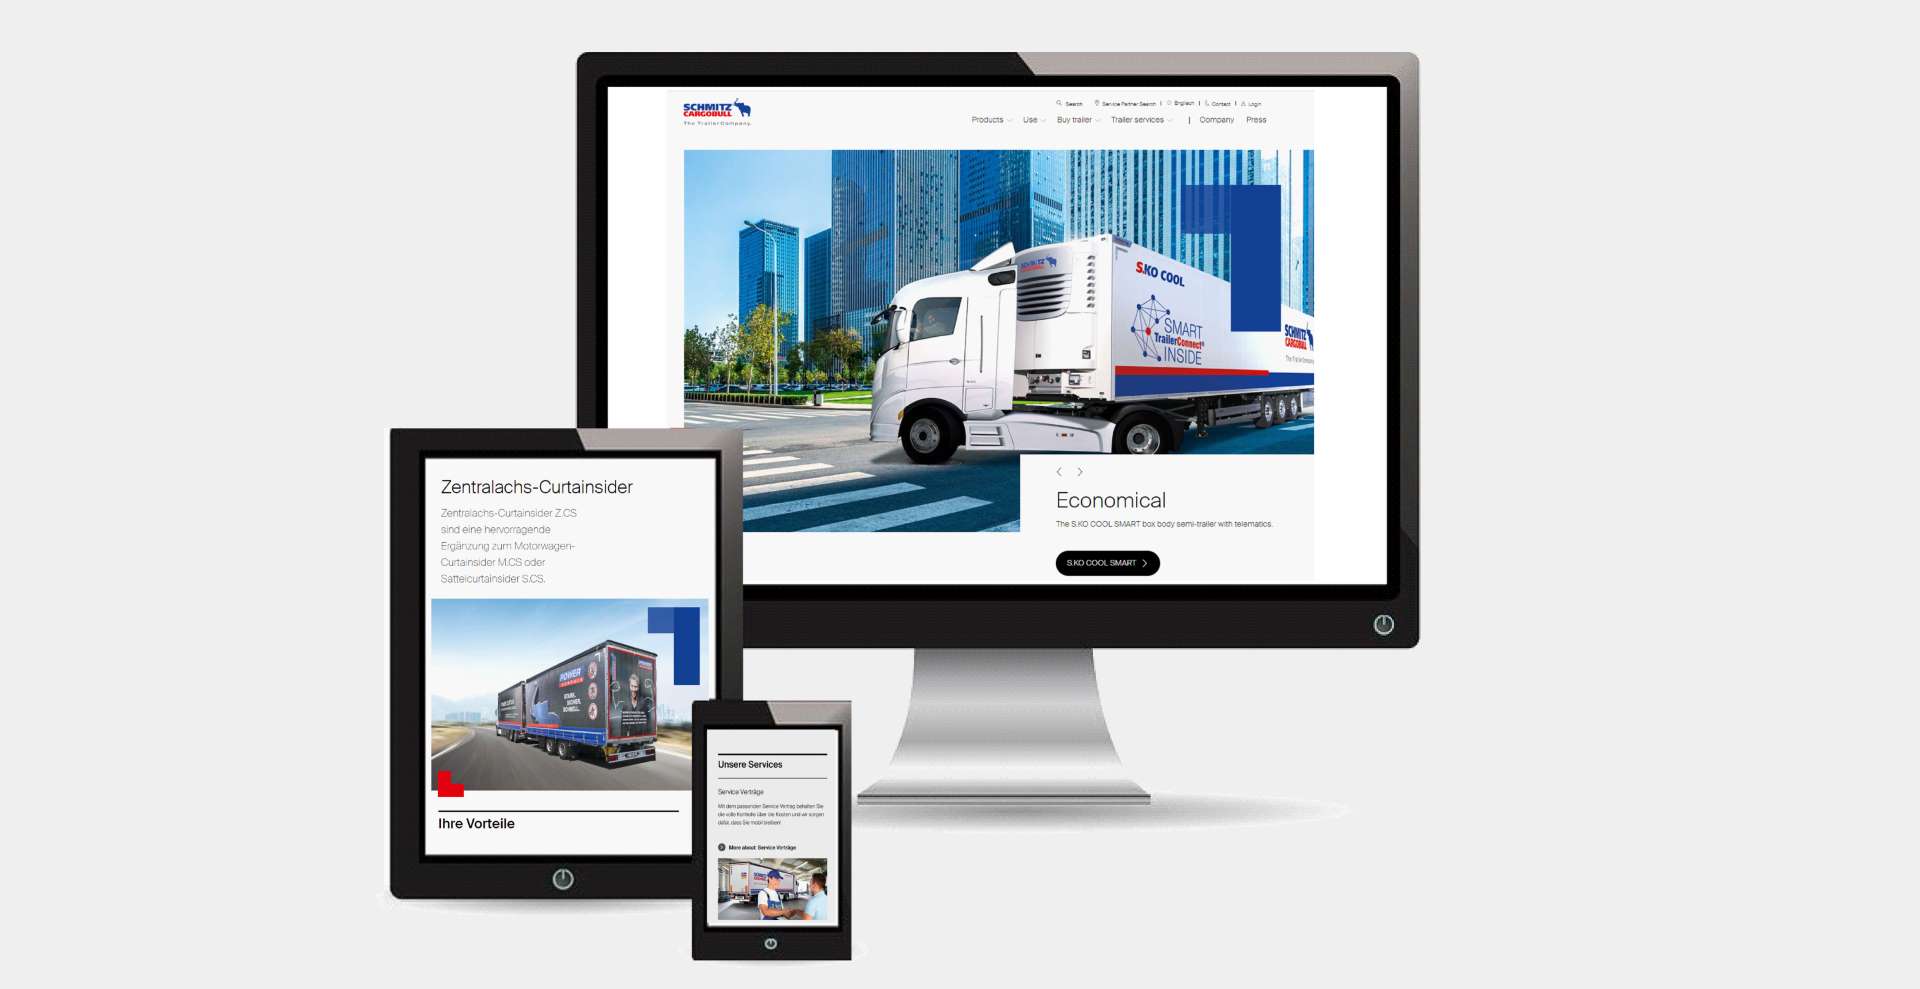 Schmitz Cargobull Launches New Website